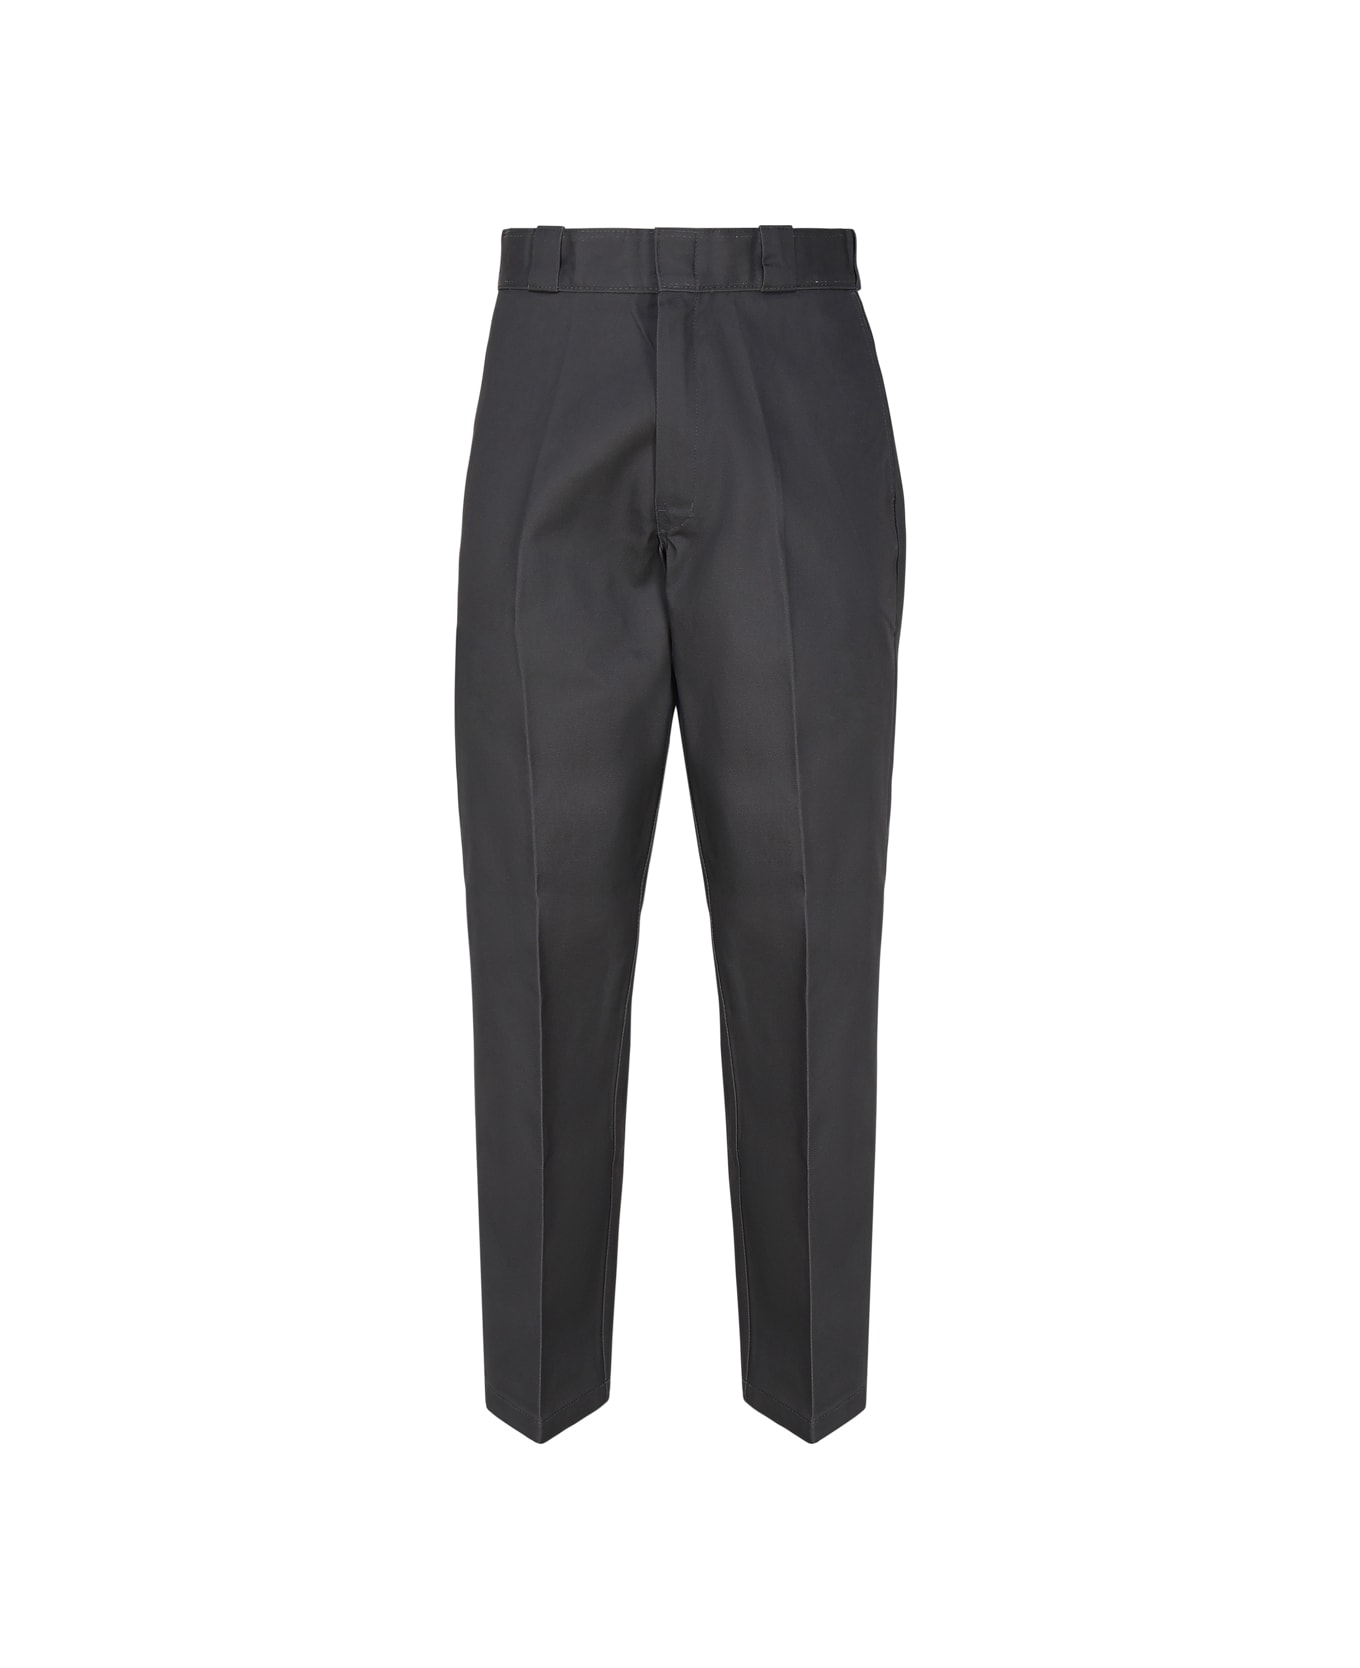 Dickies Work Trousers 874 - Charcoal grey